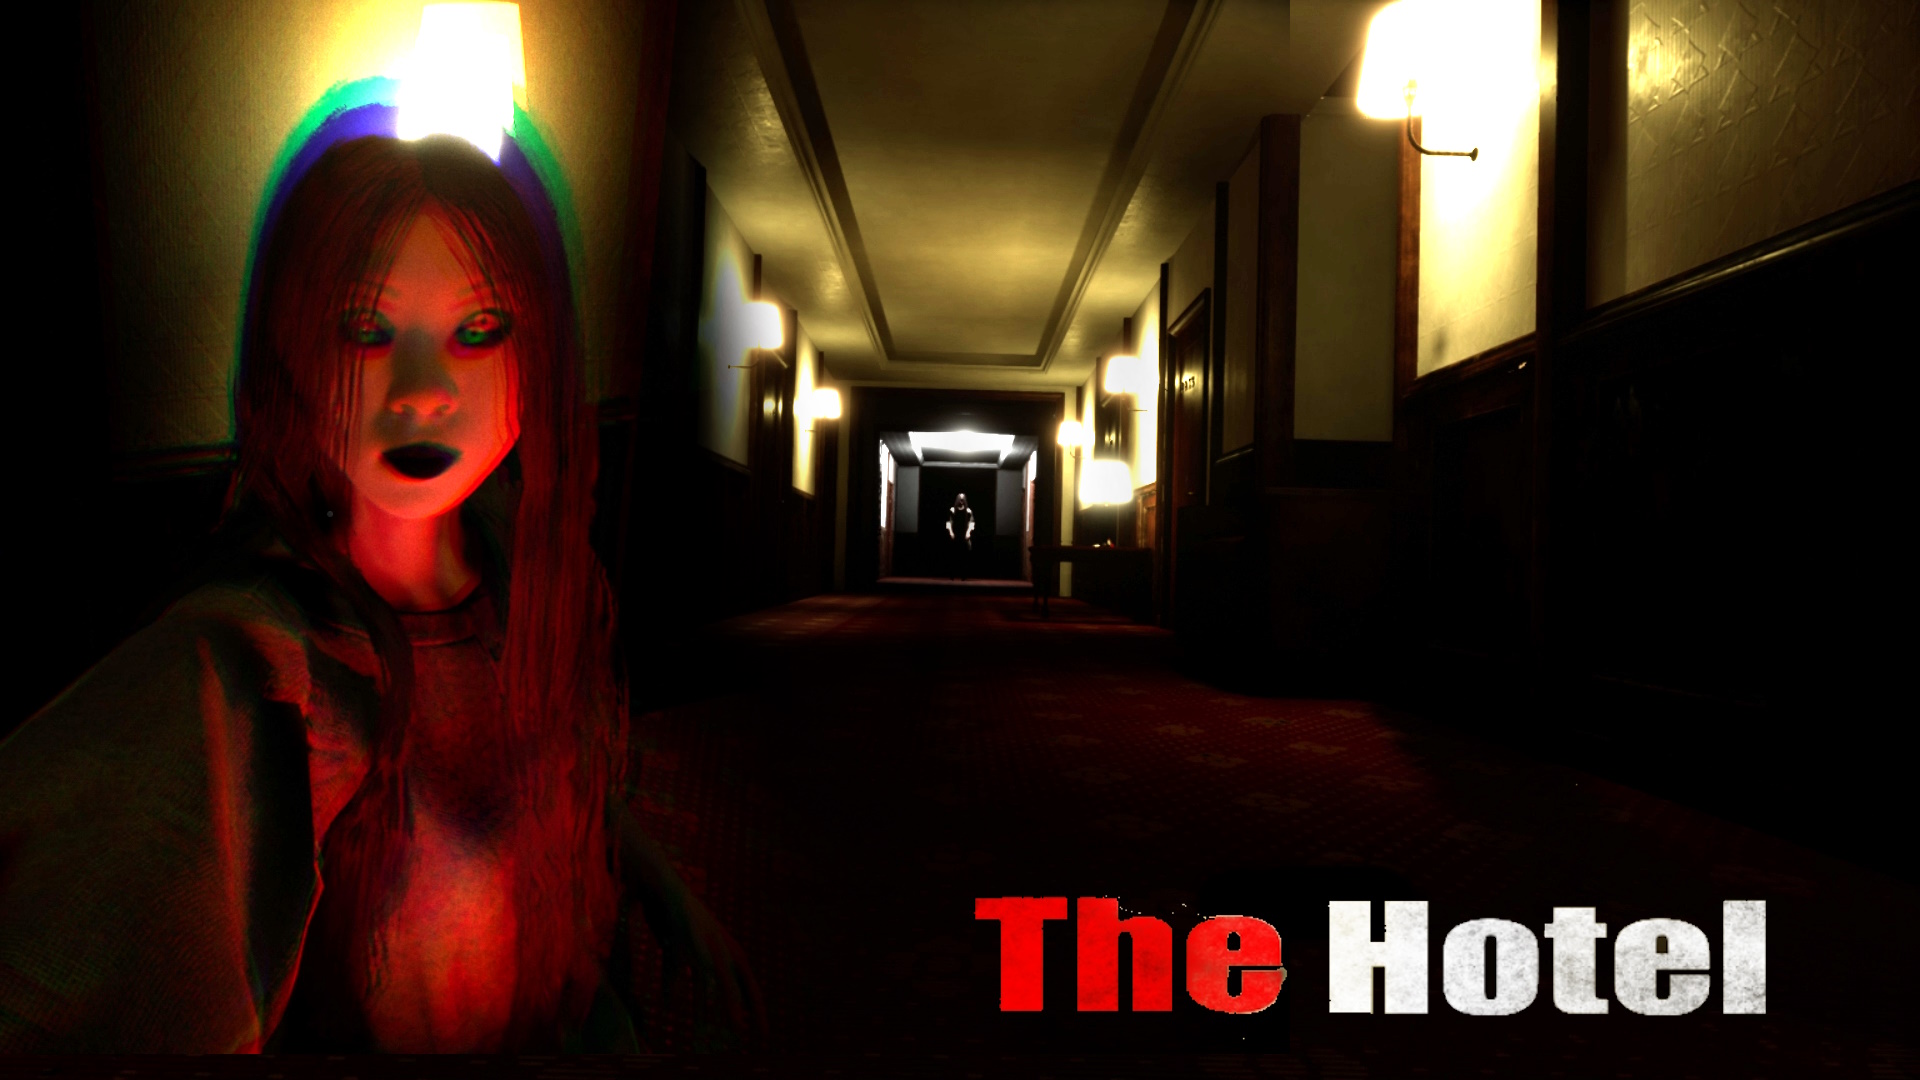 The Hotel ✅Жуткий хоррор в Отеле Призраков✅PC Steam игра 2022